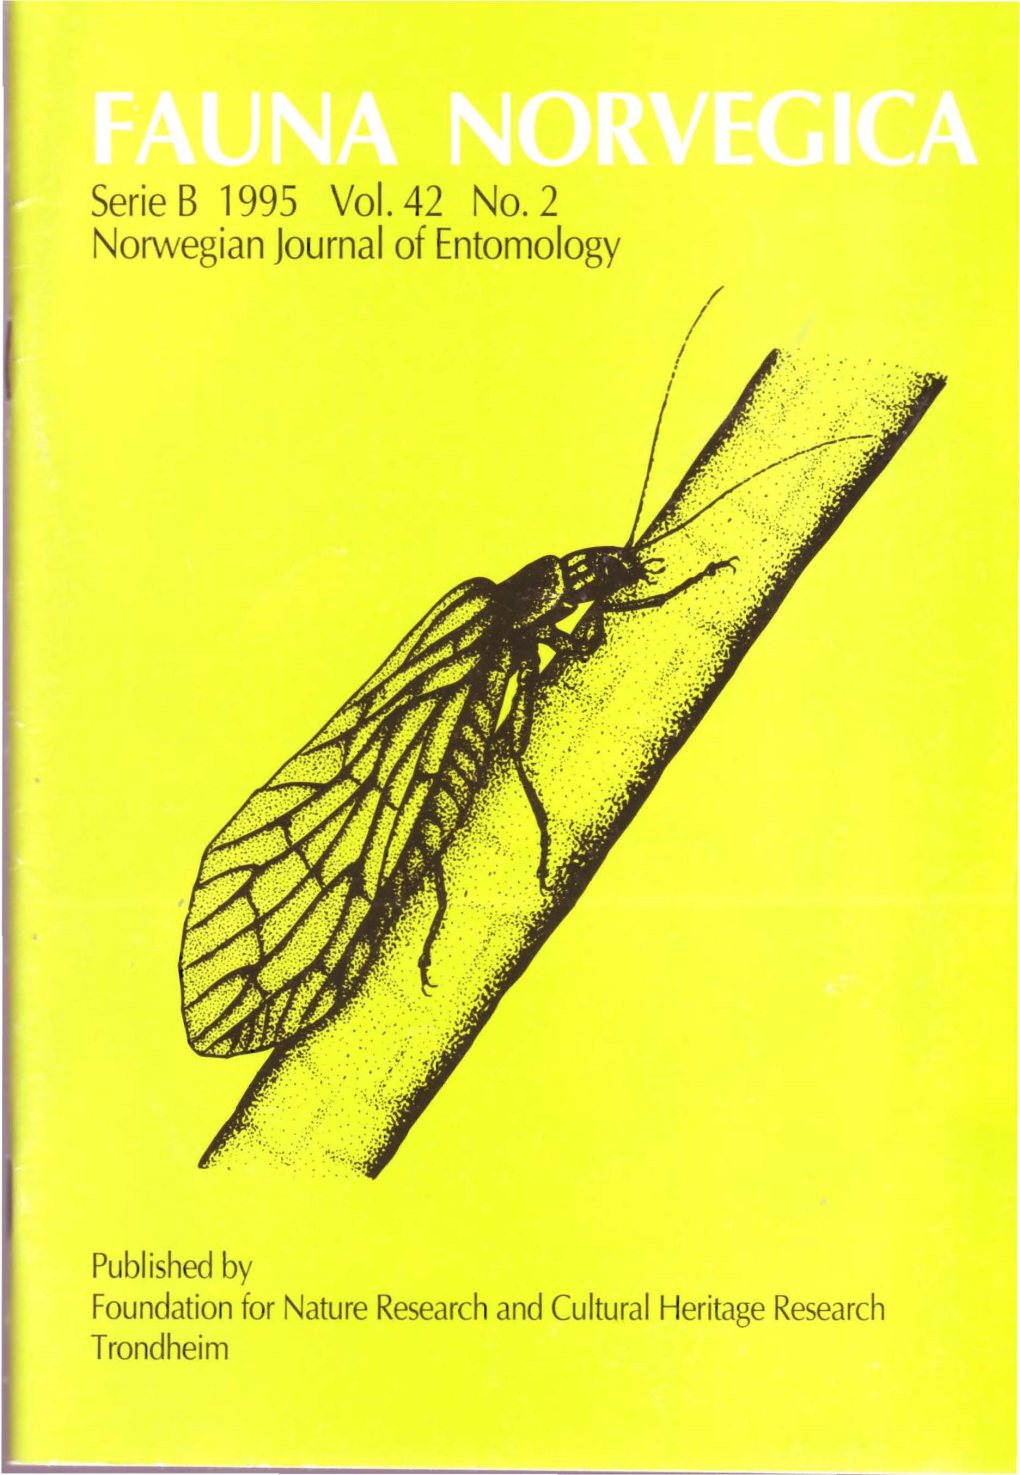 Serie B 1995 Vo!. 42 No. 2 Norwegian Journal of Entomology